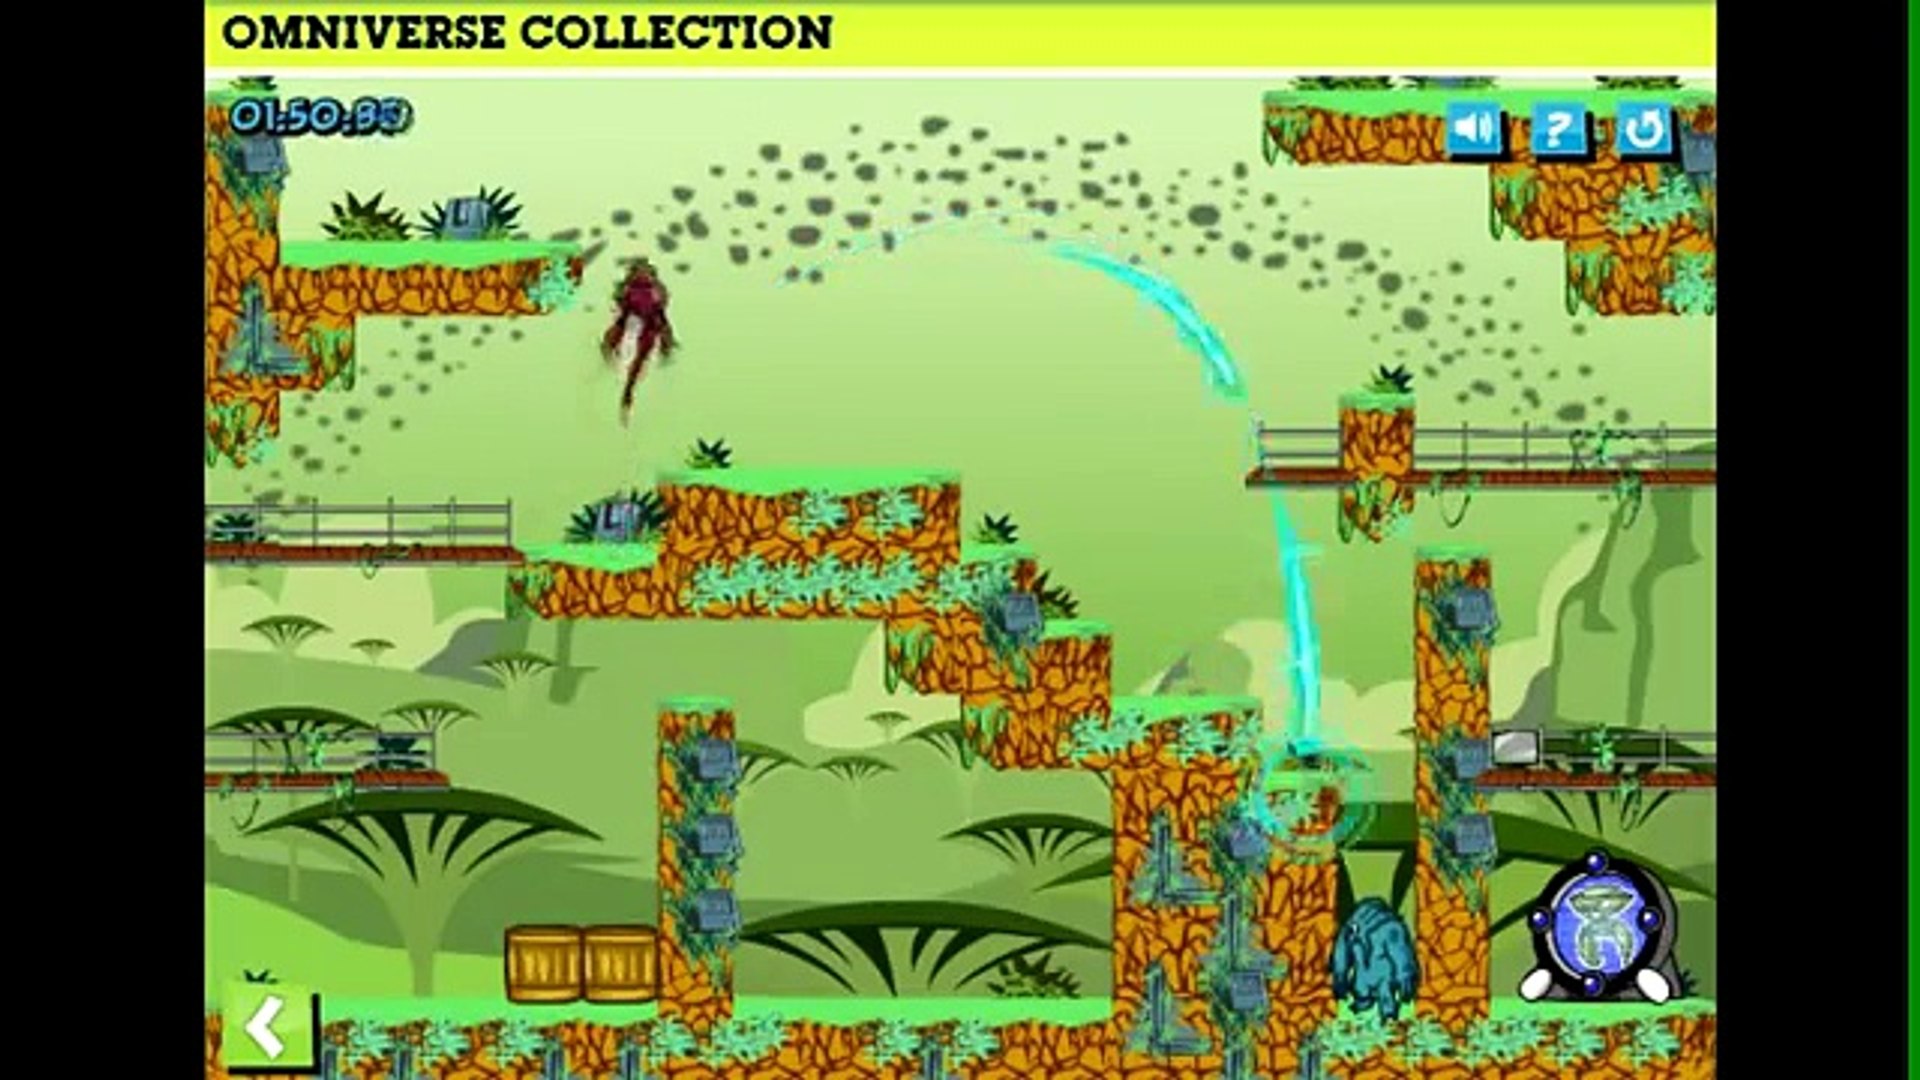 Cartoon Network Games_ Ben 10 Omniverse - Game Creator [Full Gameplay] -  Video Dailymotion